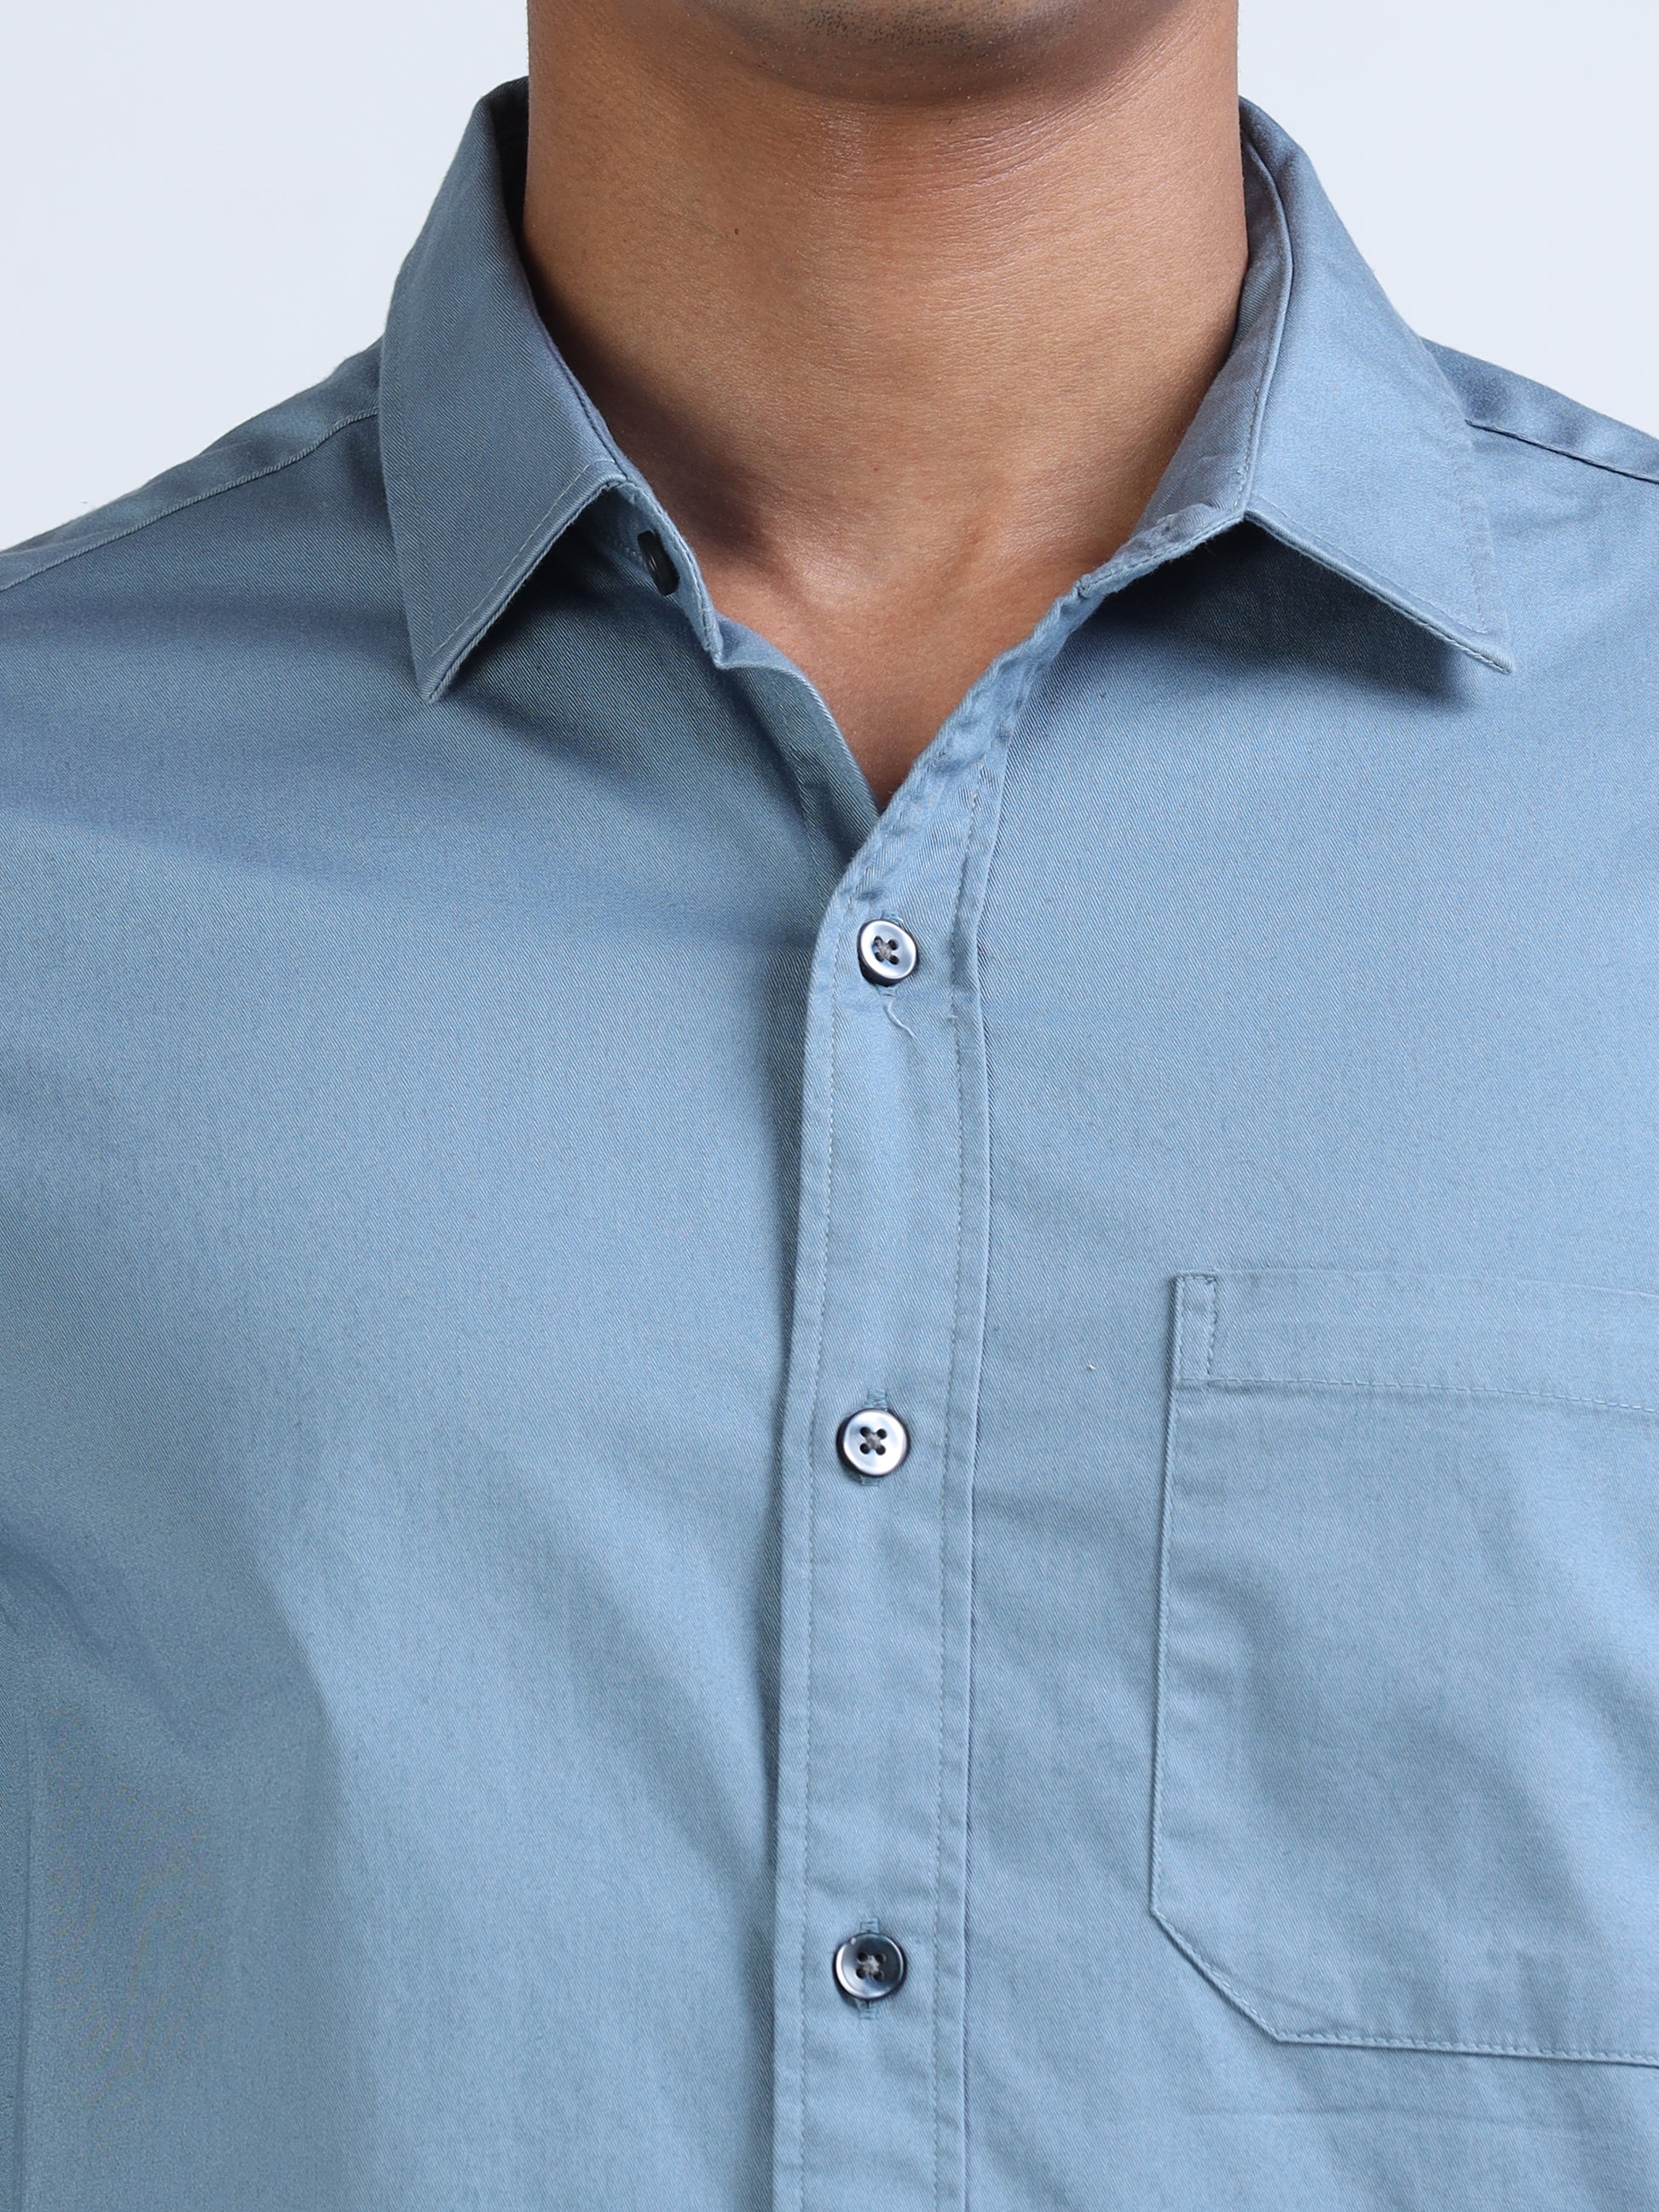 Glacier Twill Cotton Shirt for Men